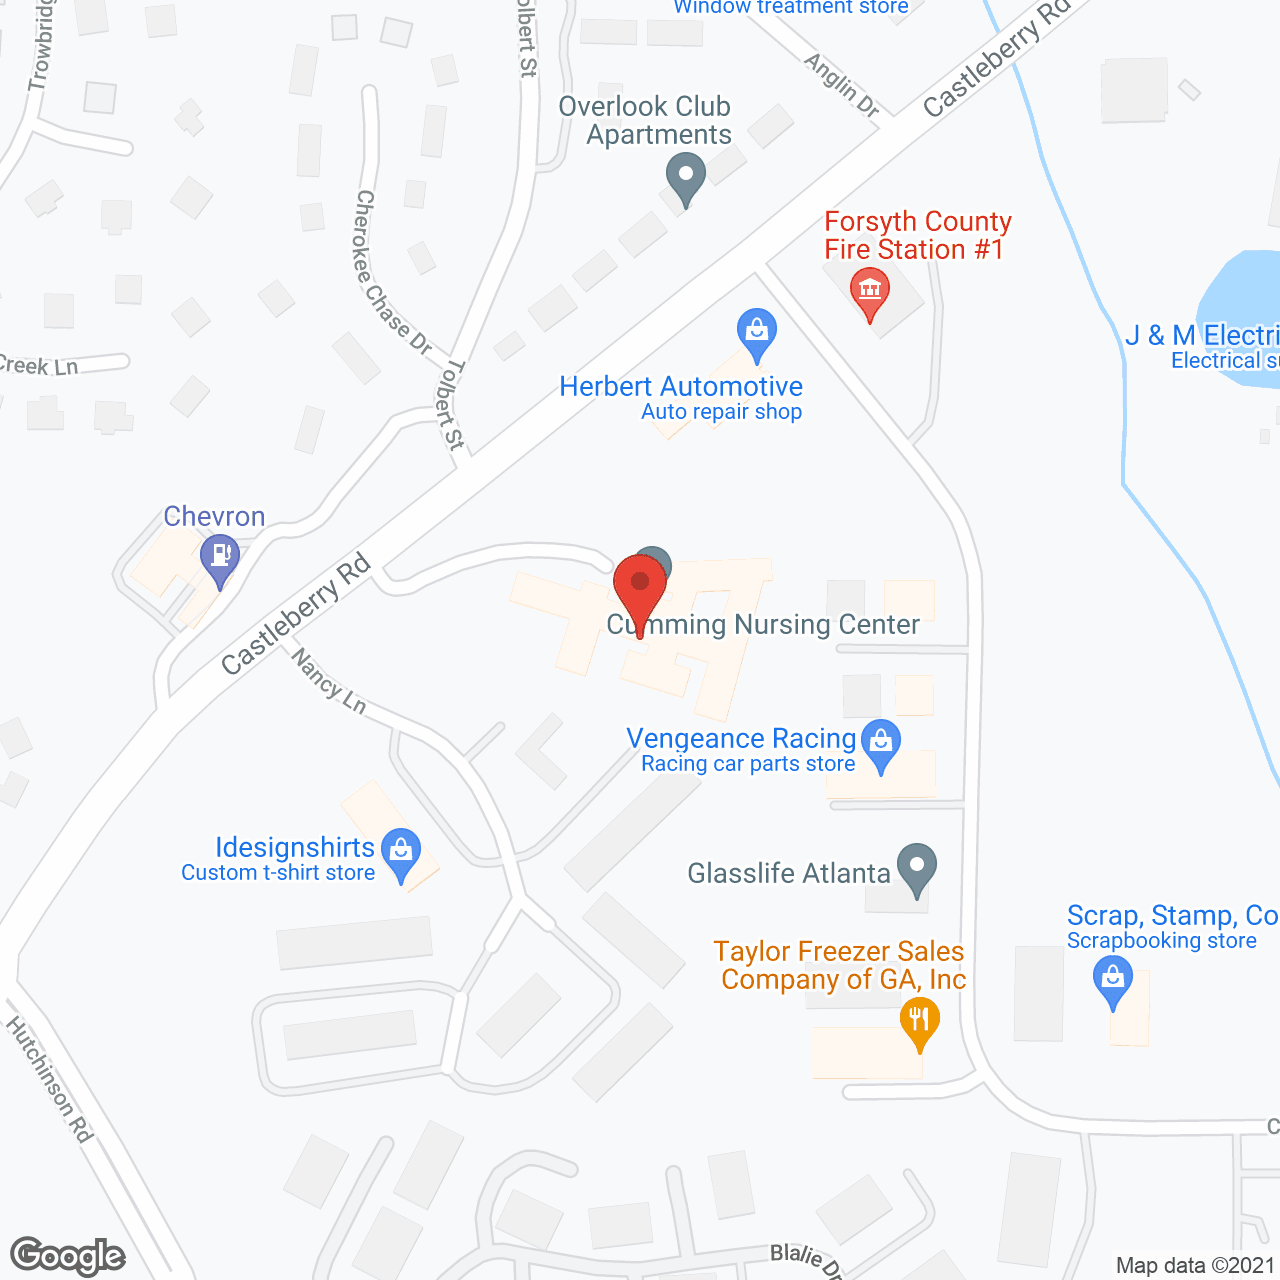 Cumming Nursing Center in google map